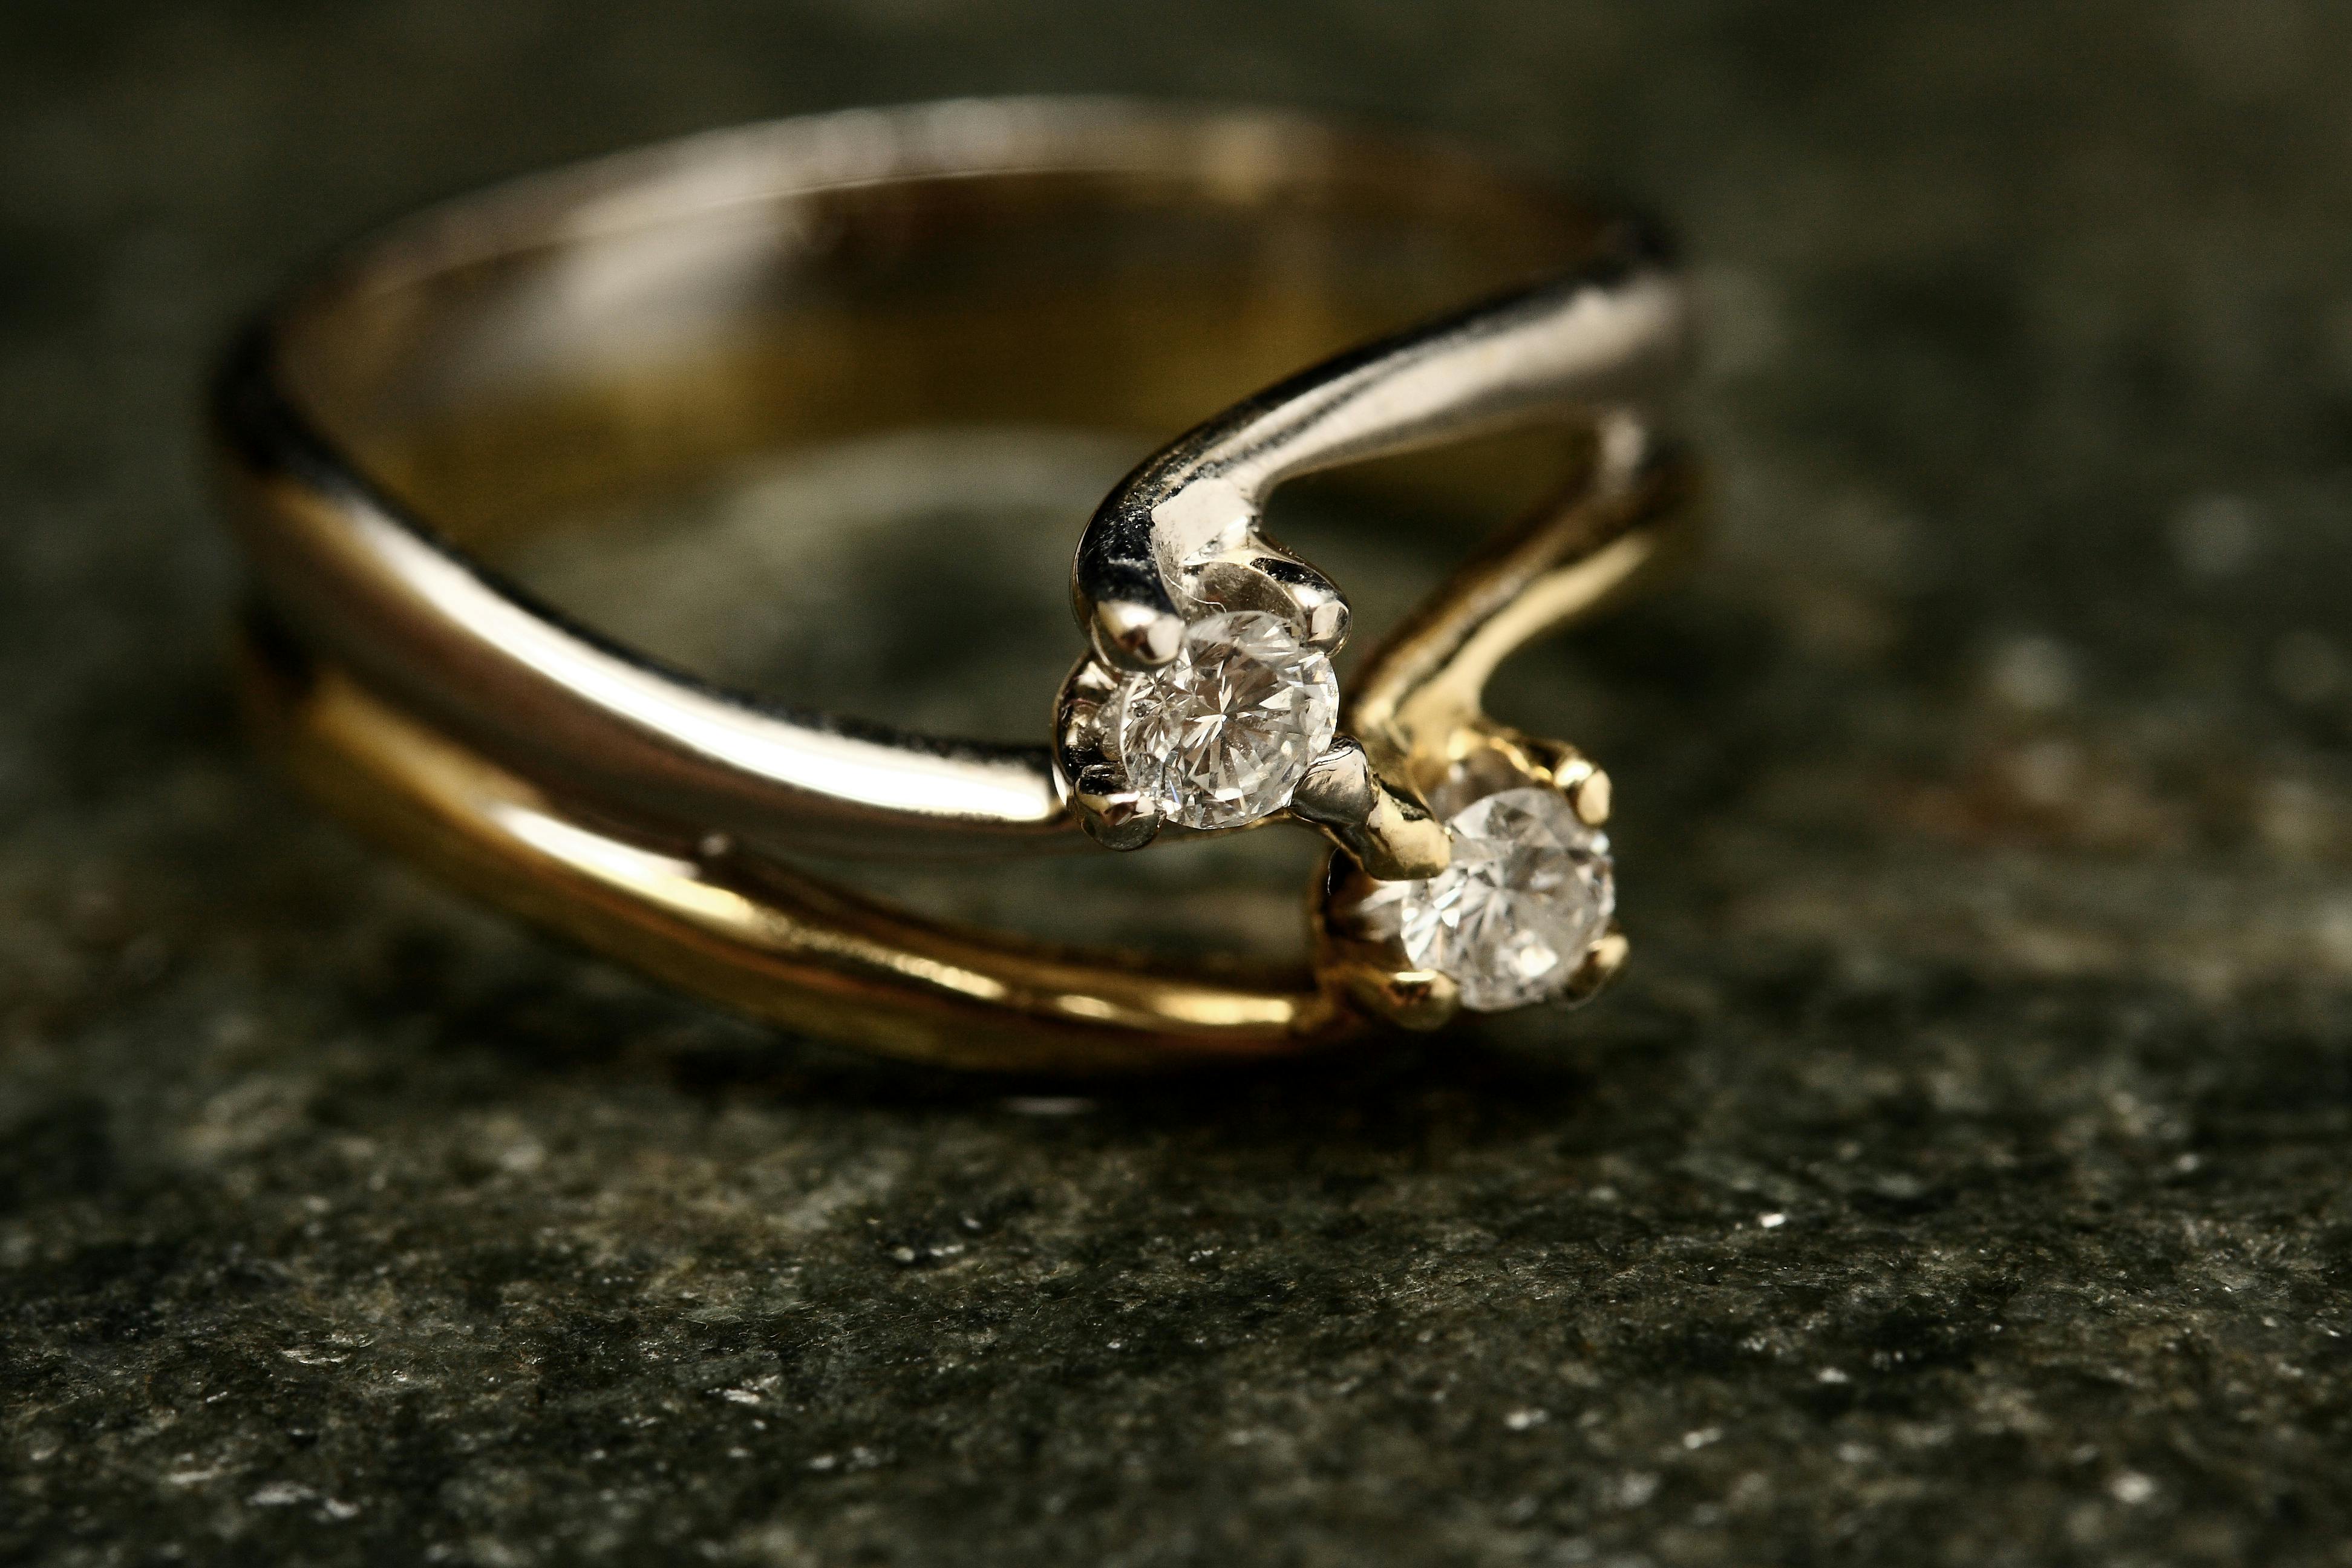 Isolated Image Of A Diamond Ring On A White Background Stockfoto en meer  beelden van Diamantring - iStock